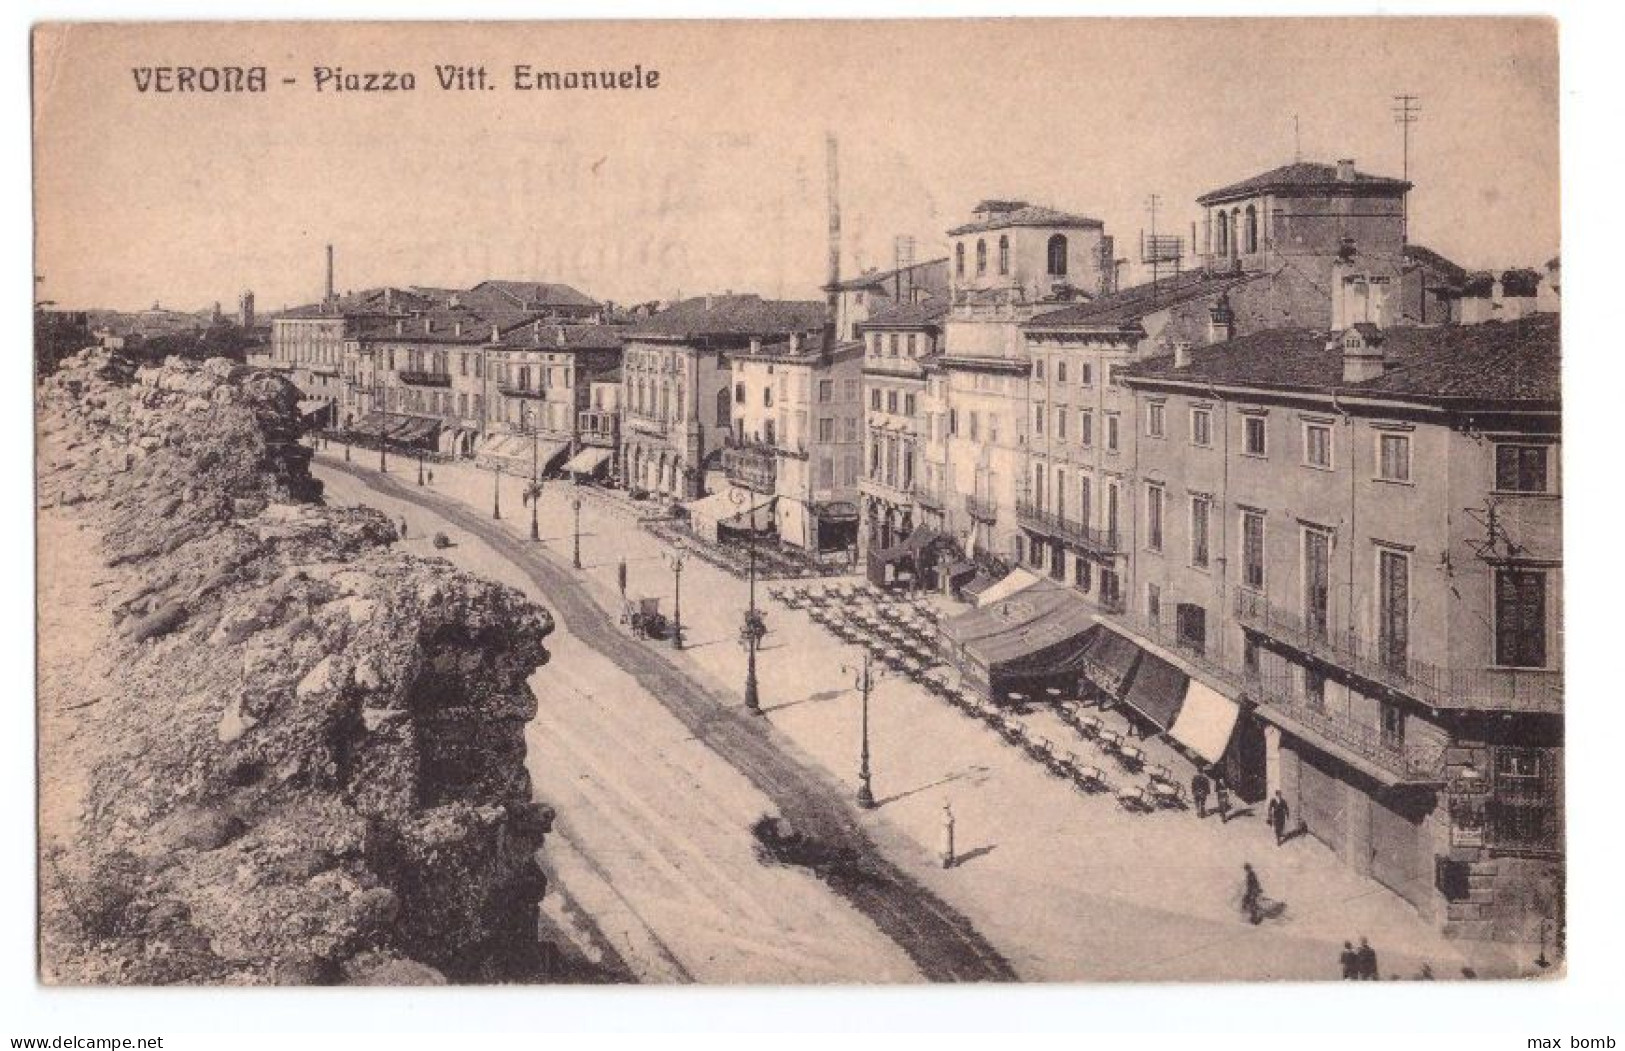 1929 VERONA 11  P. VITT EMANUELE - Verona